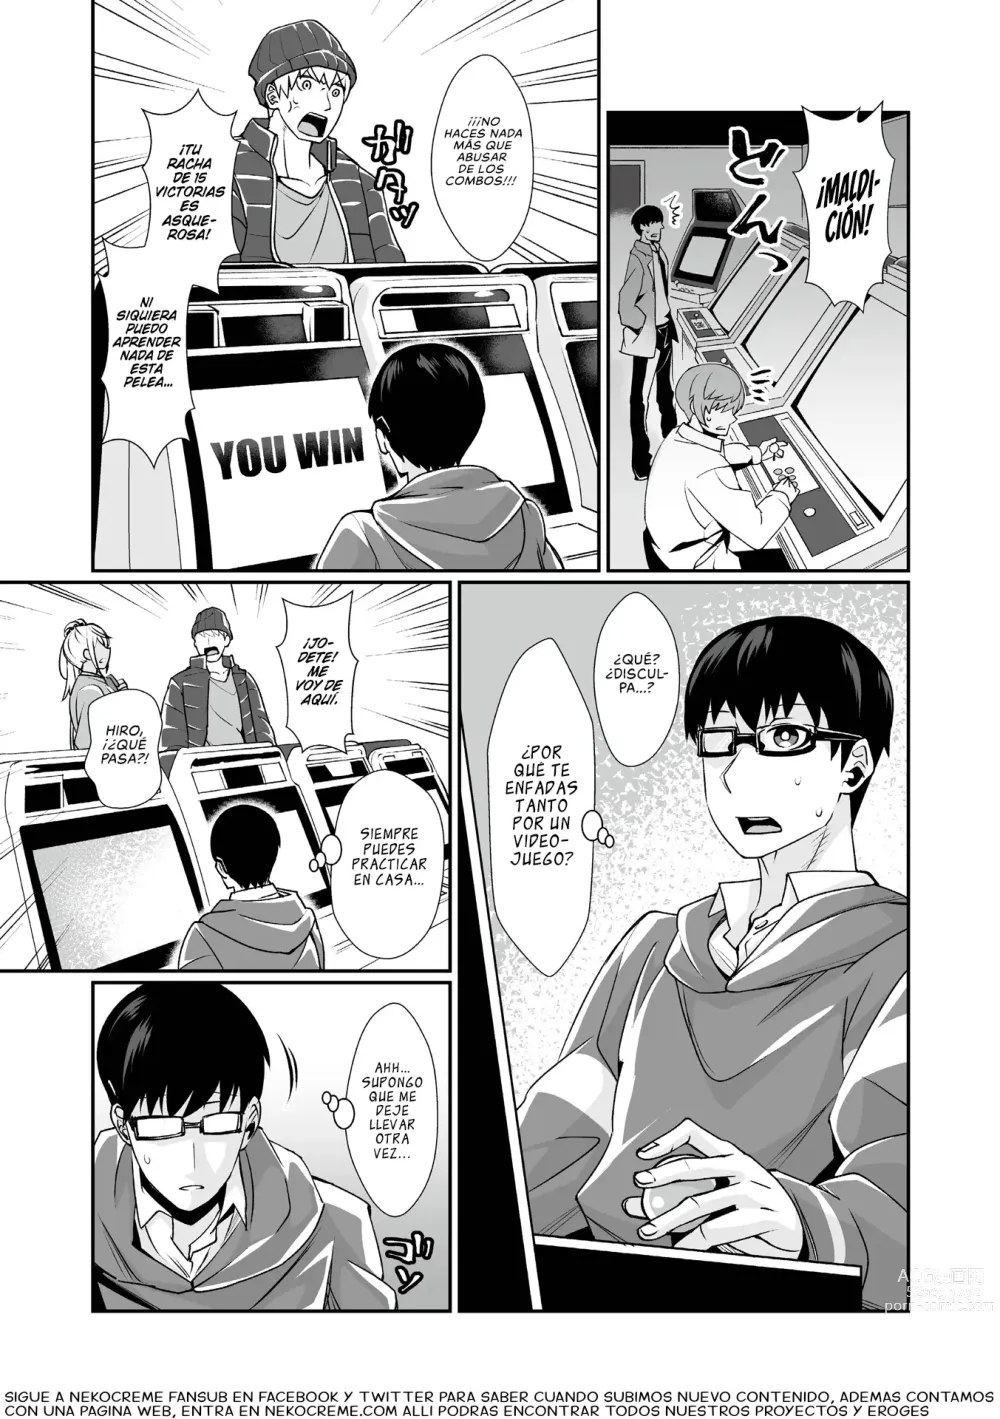 Page 3 of manga Kuro Gal Gamer Encount!